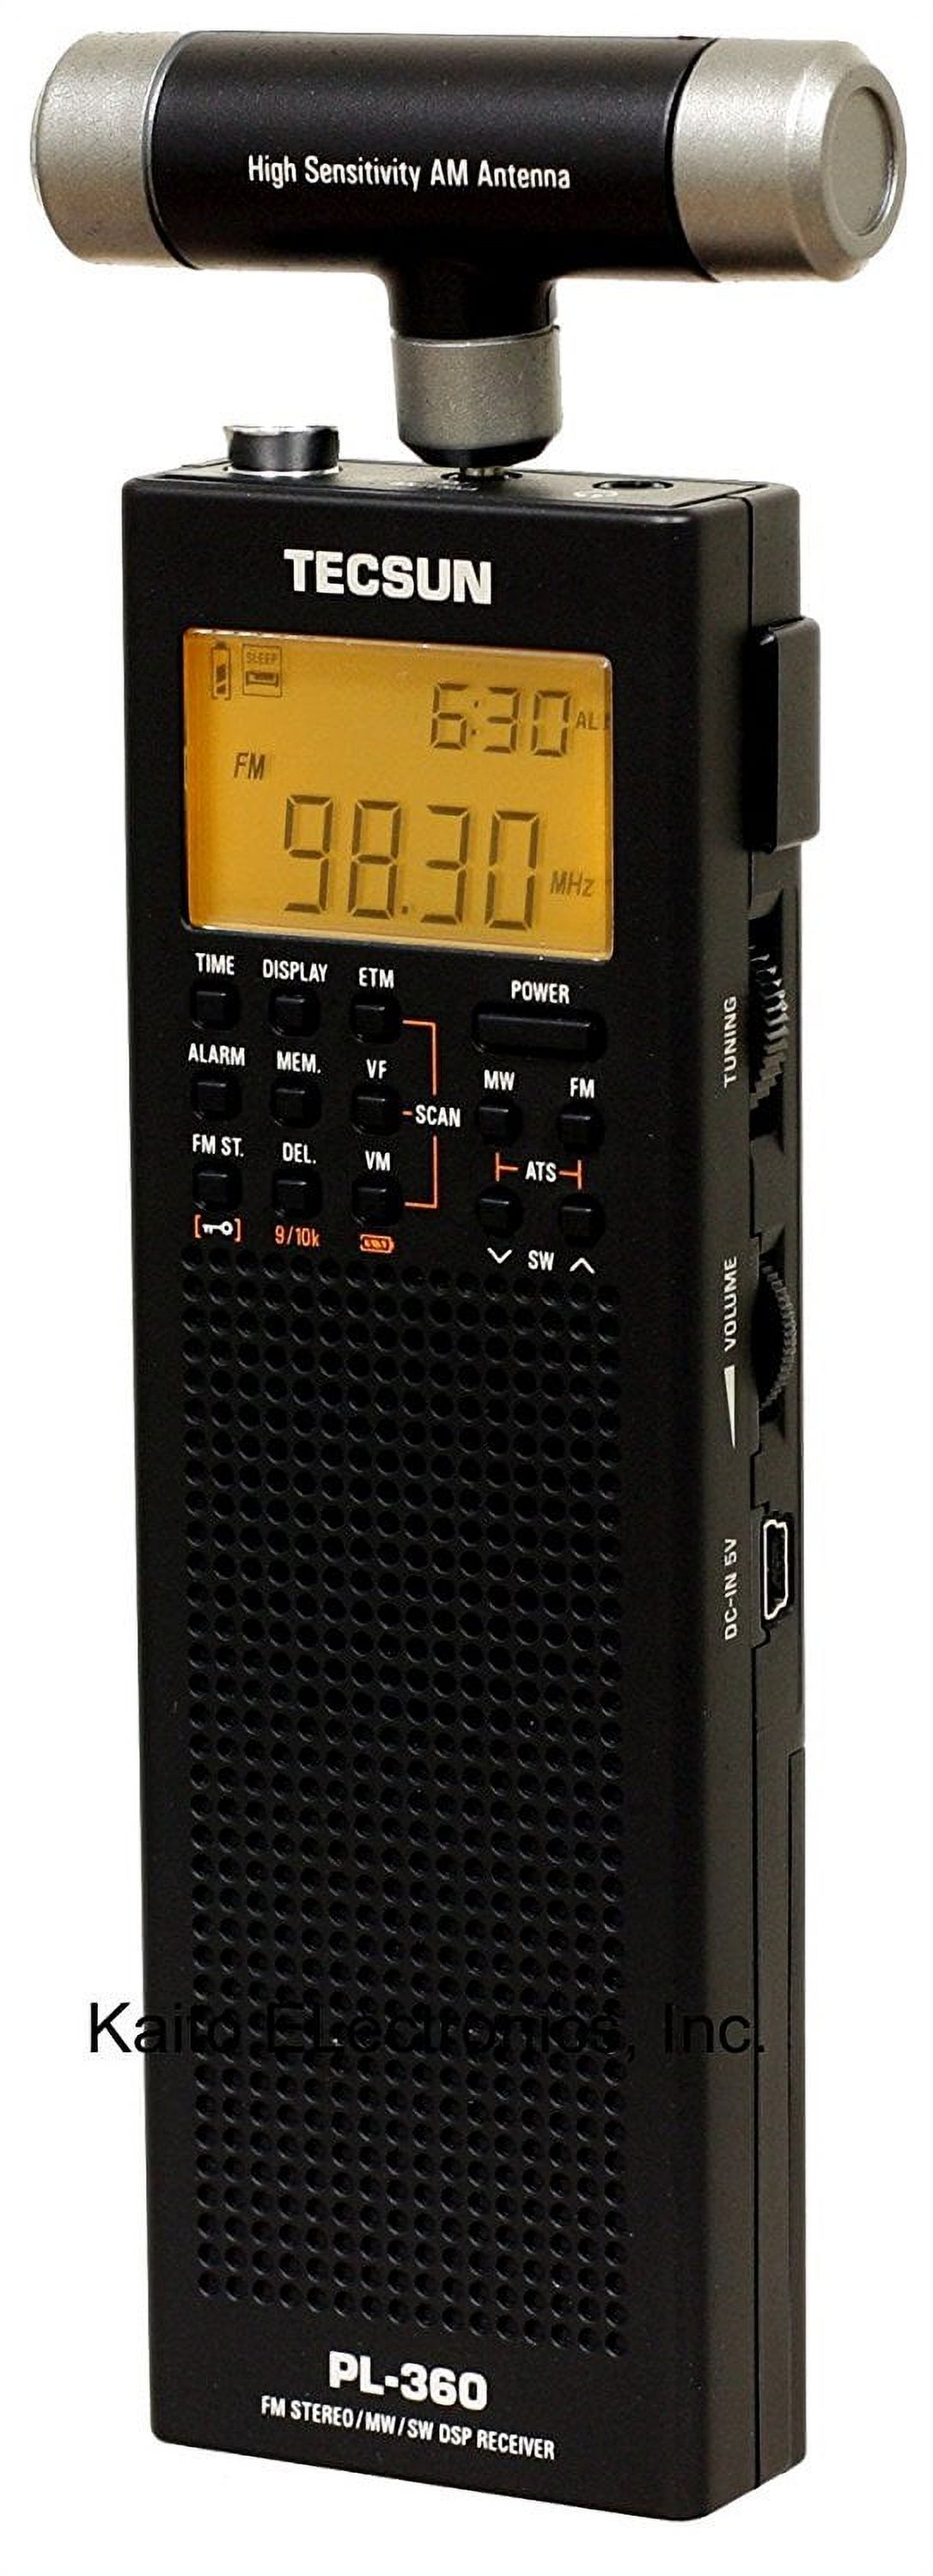 Tecsun Portable AM/FM Radios, Black, PL360BLK - image 1 of 4